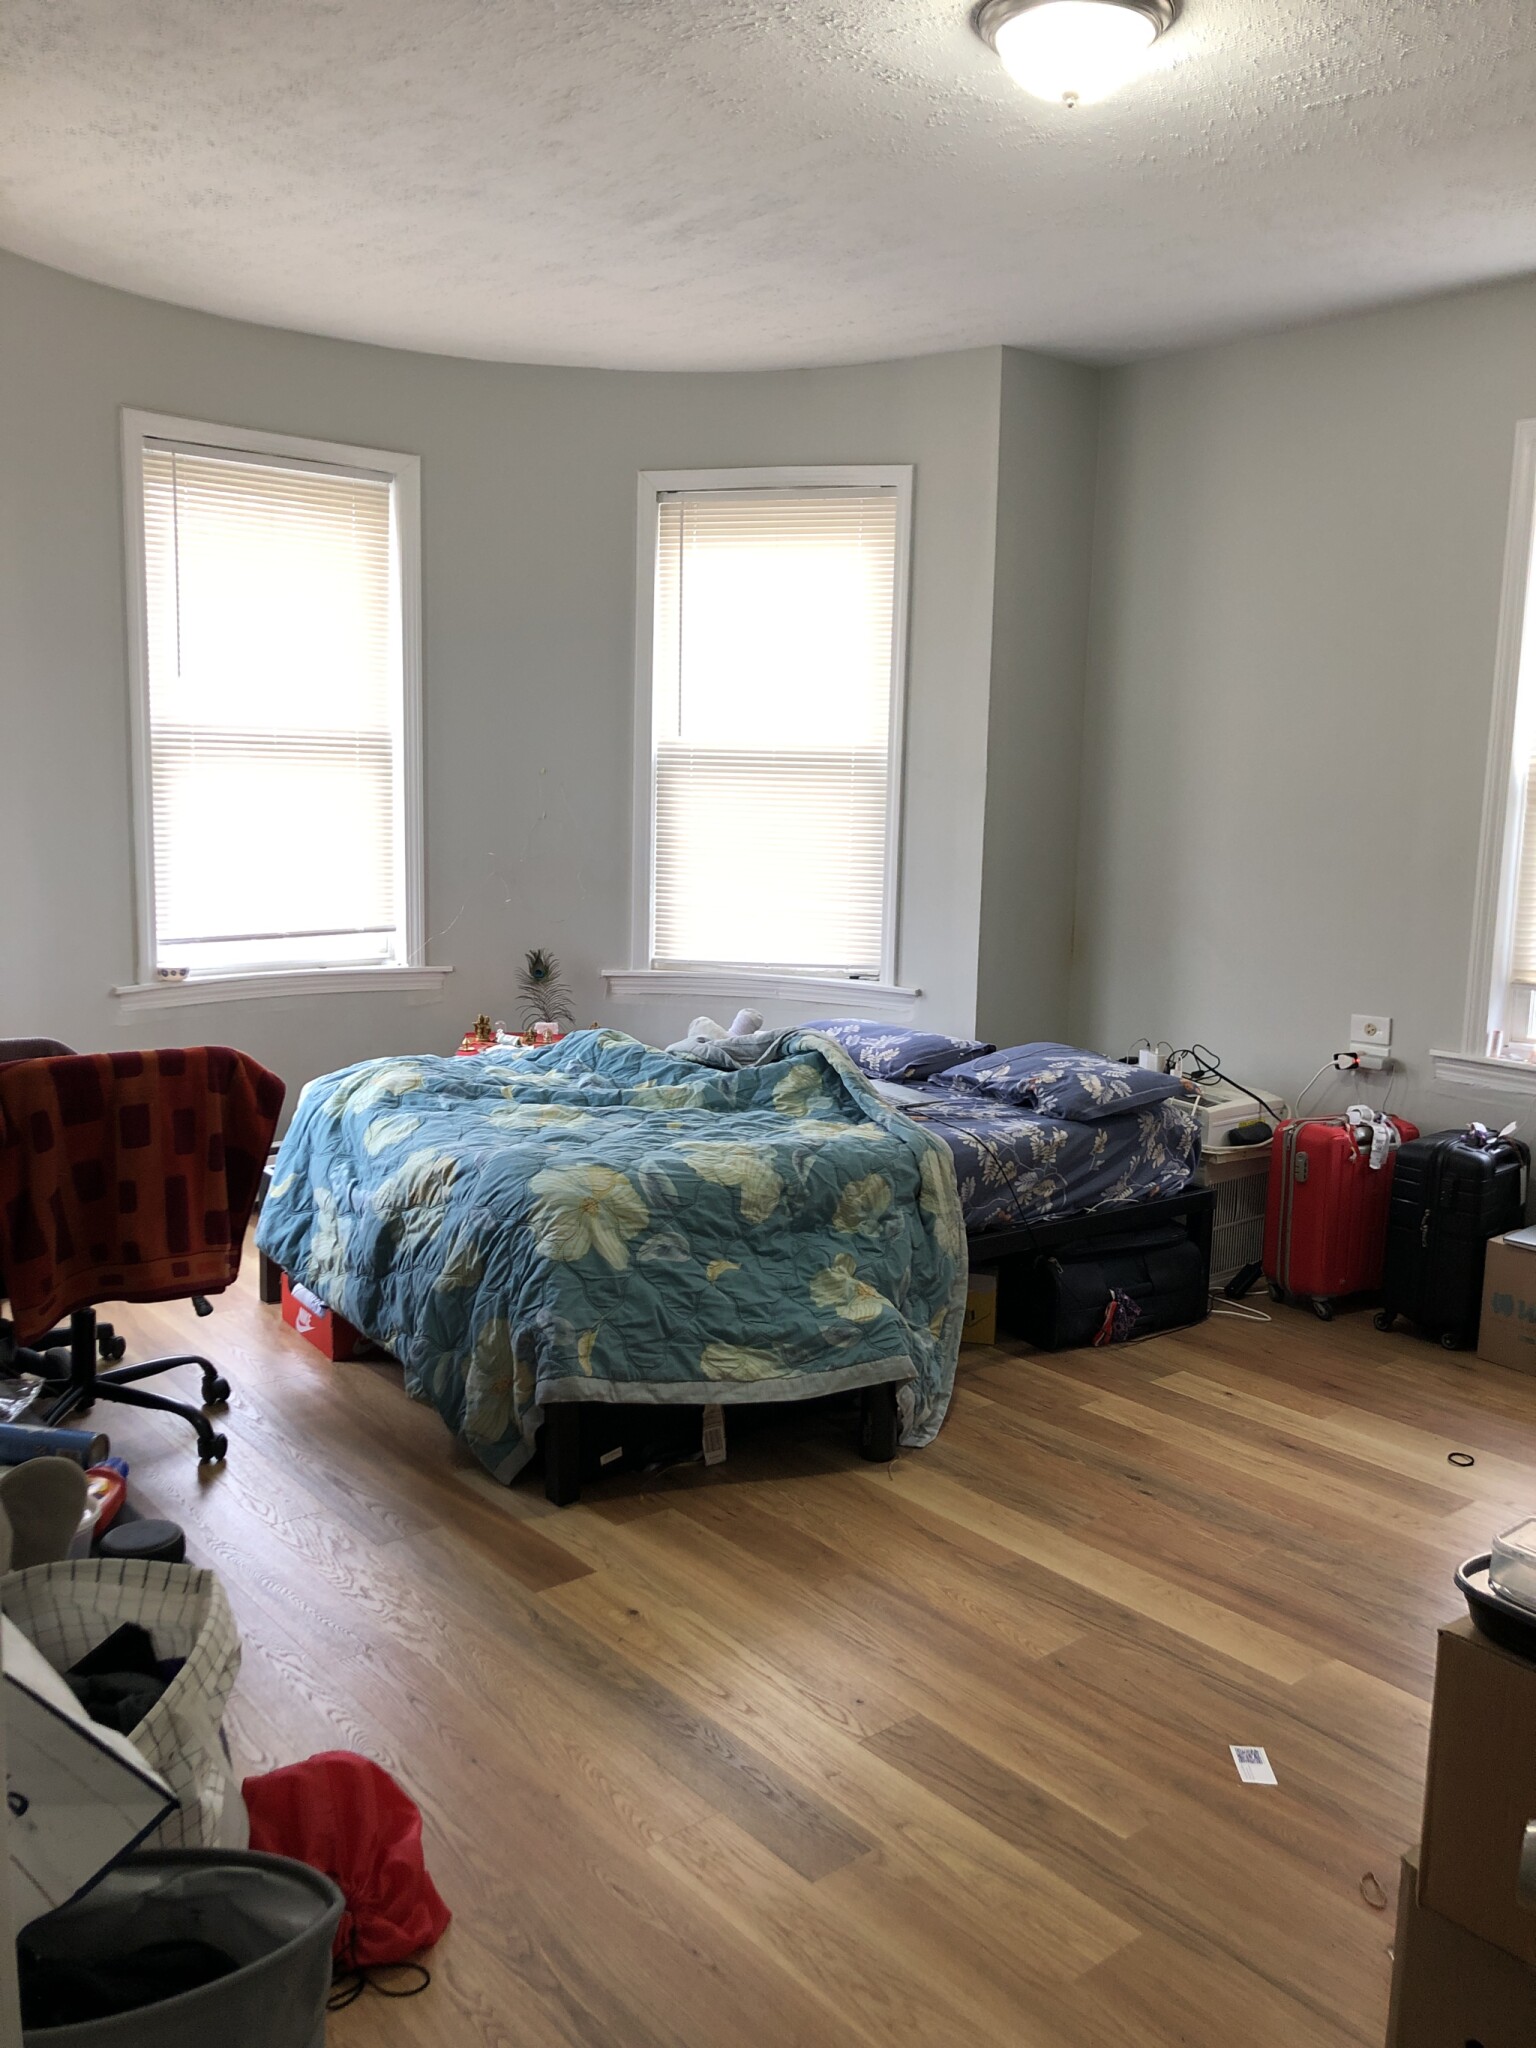 Photos of apartment on Oakland St.,Boston MA 02119